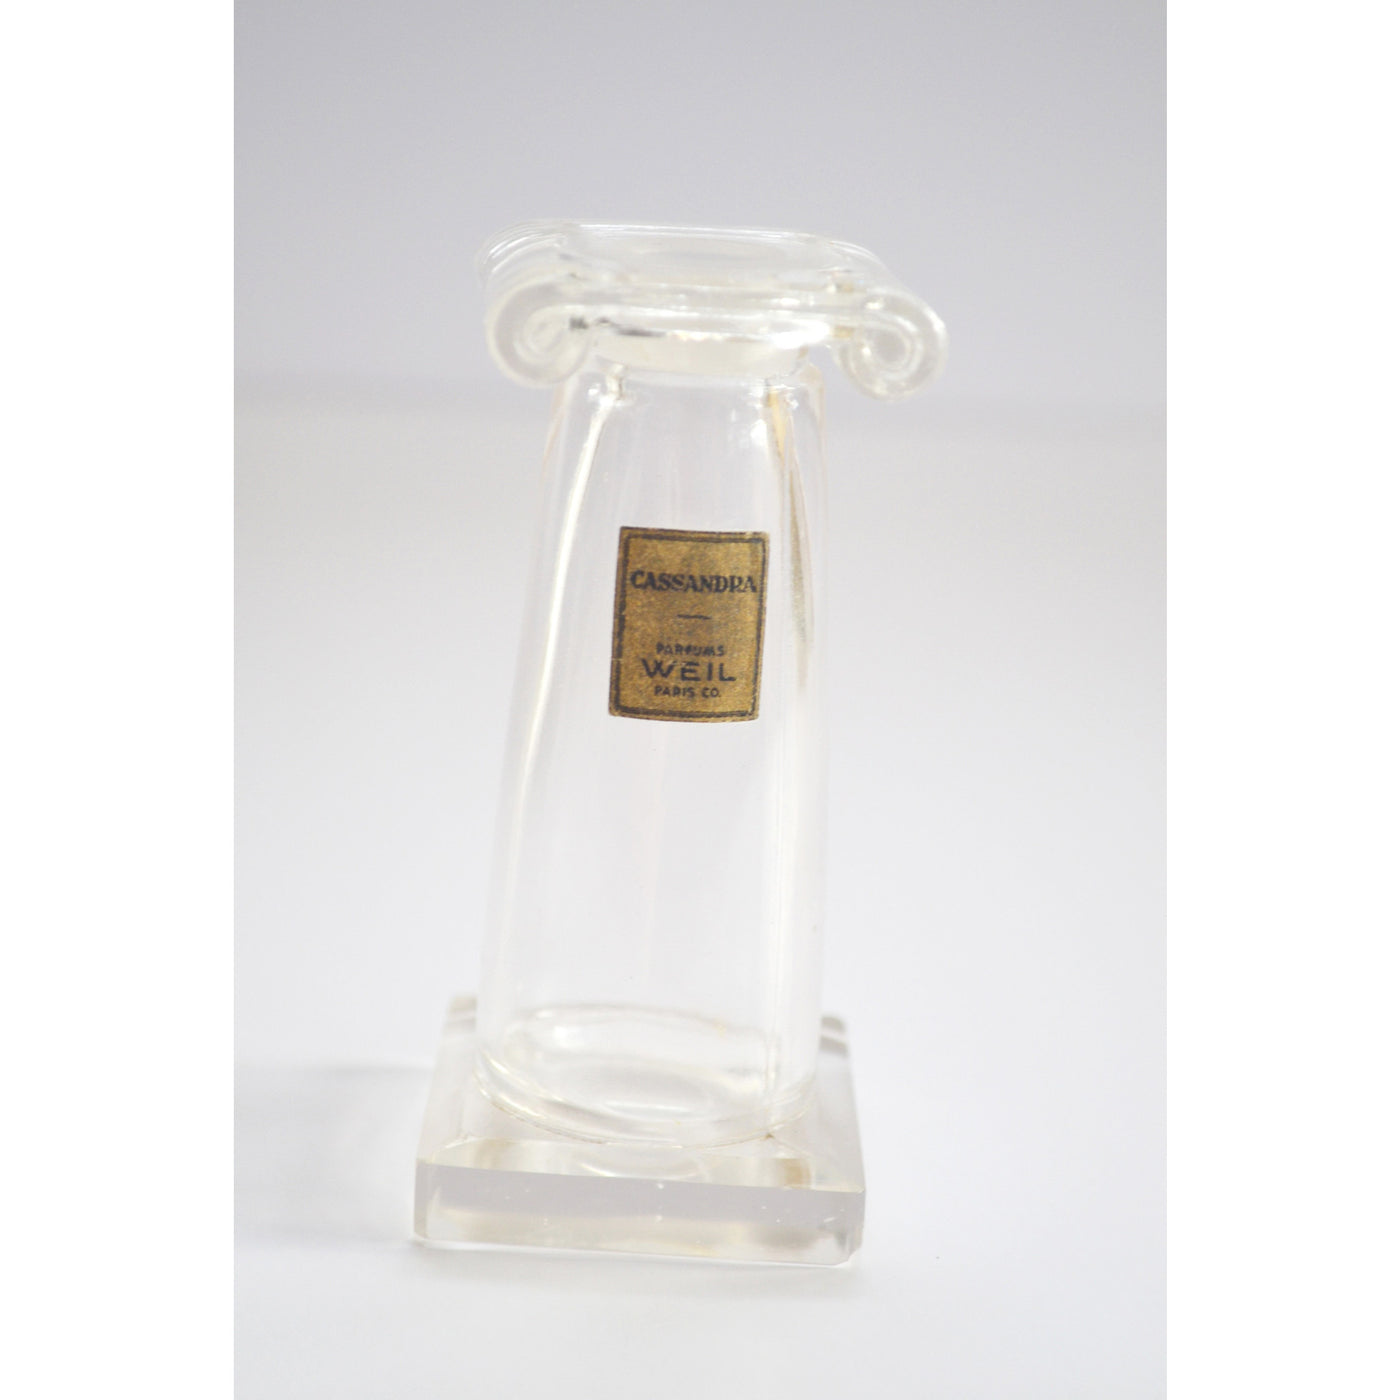 Vintage Cassandra Baccarat Perfume Bottle By Weil